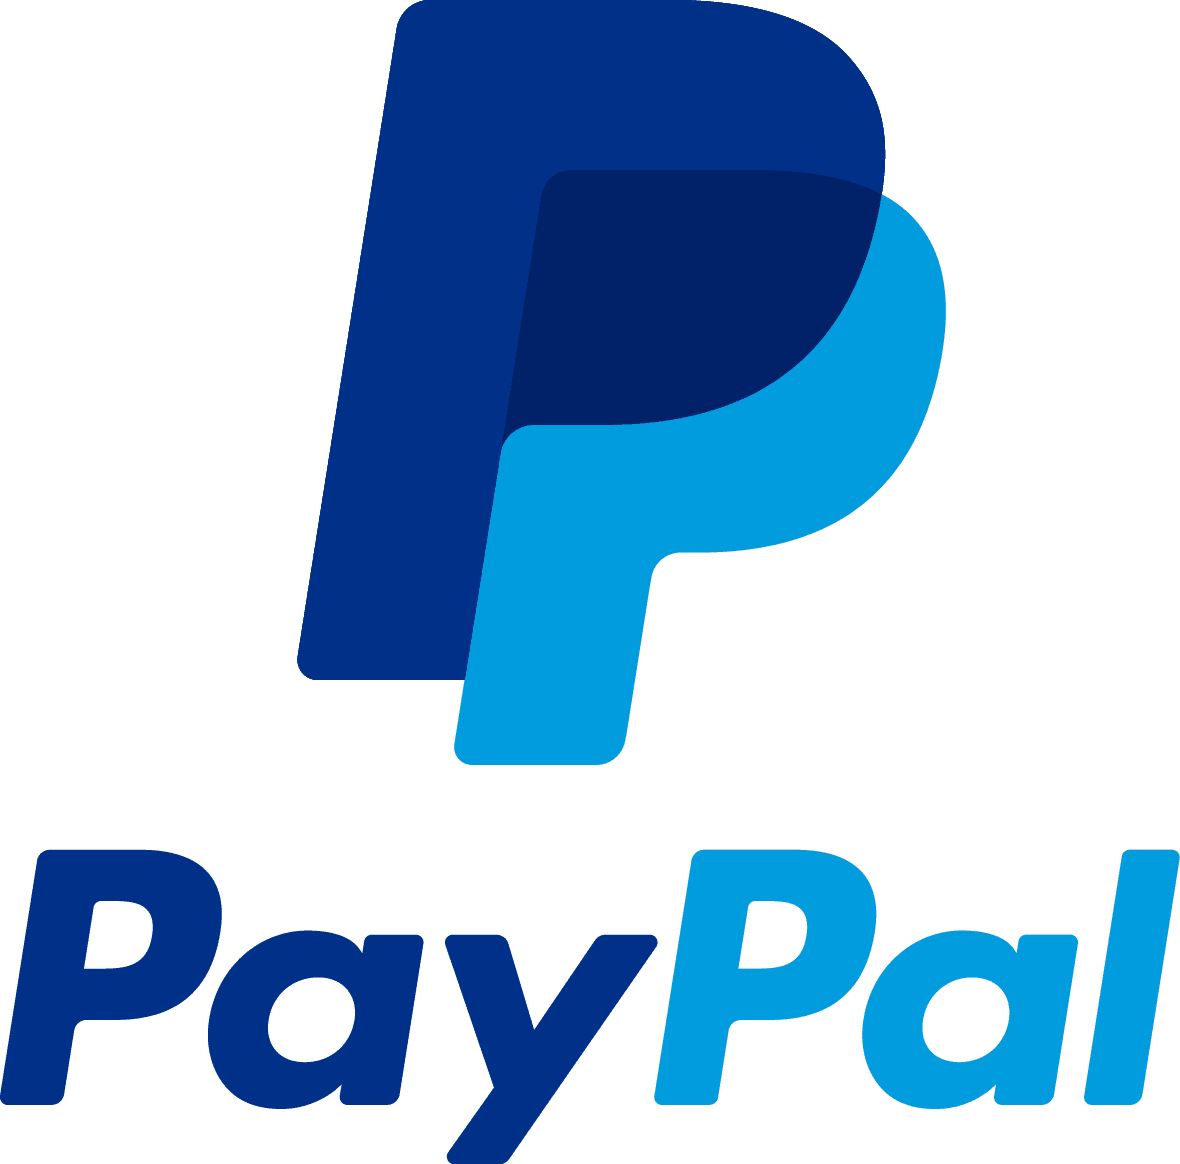 paypal-logo-1-1189388235